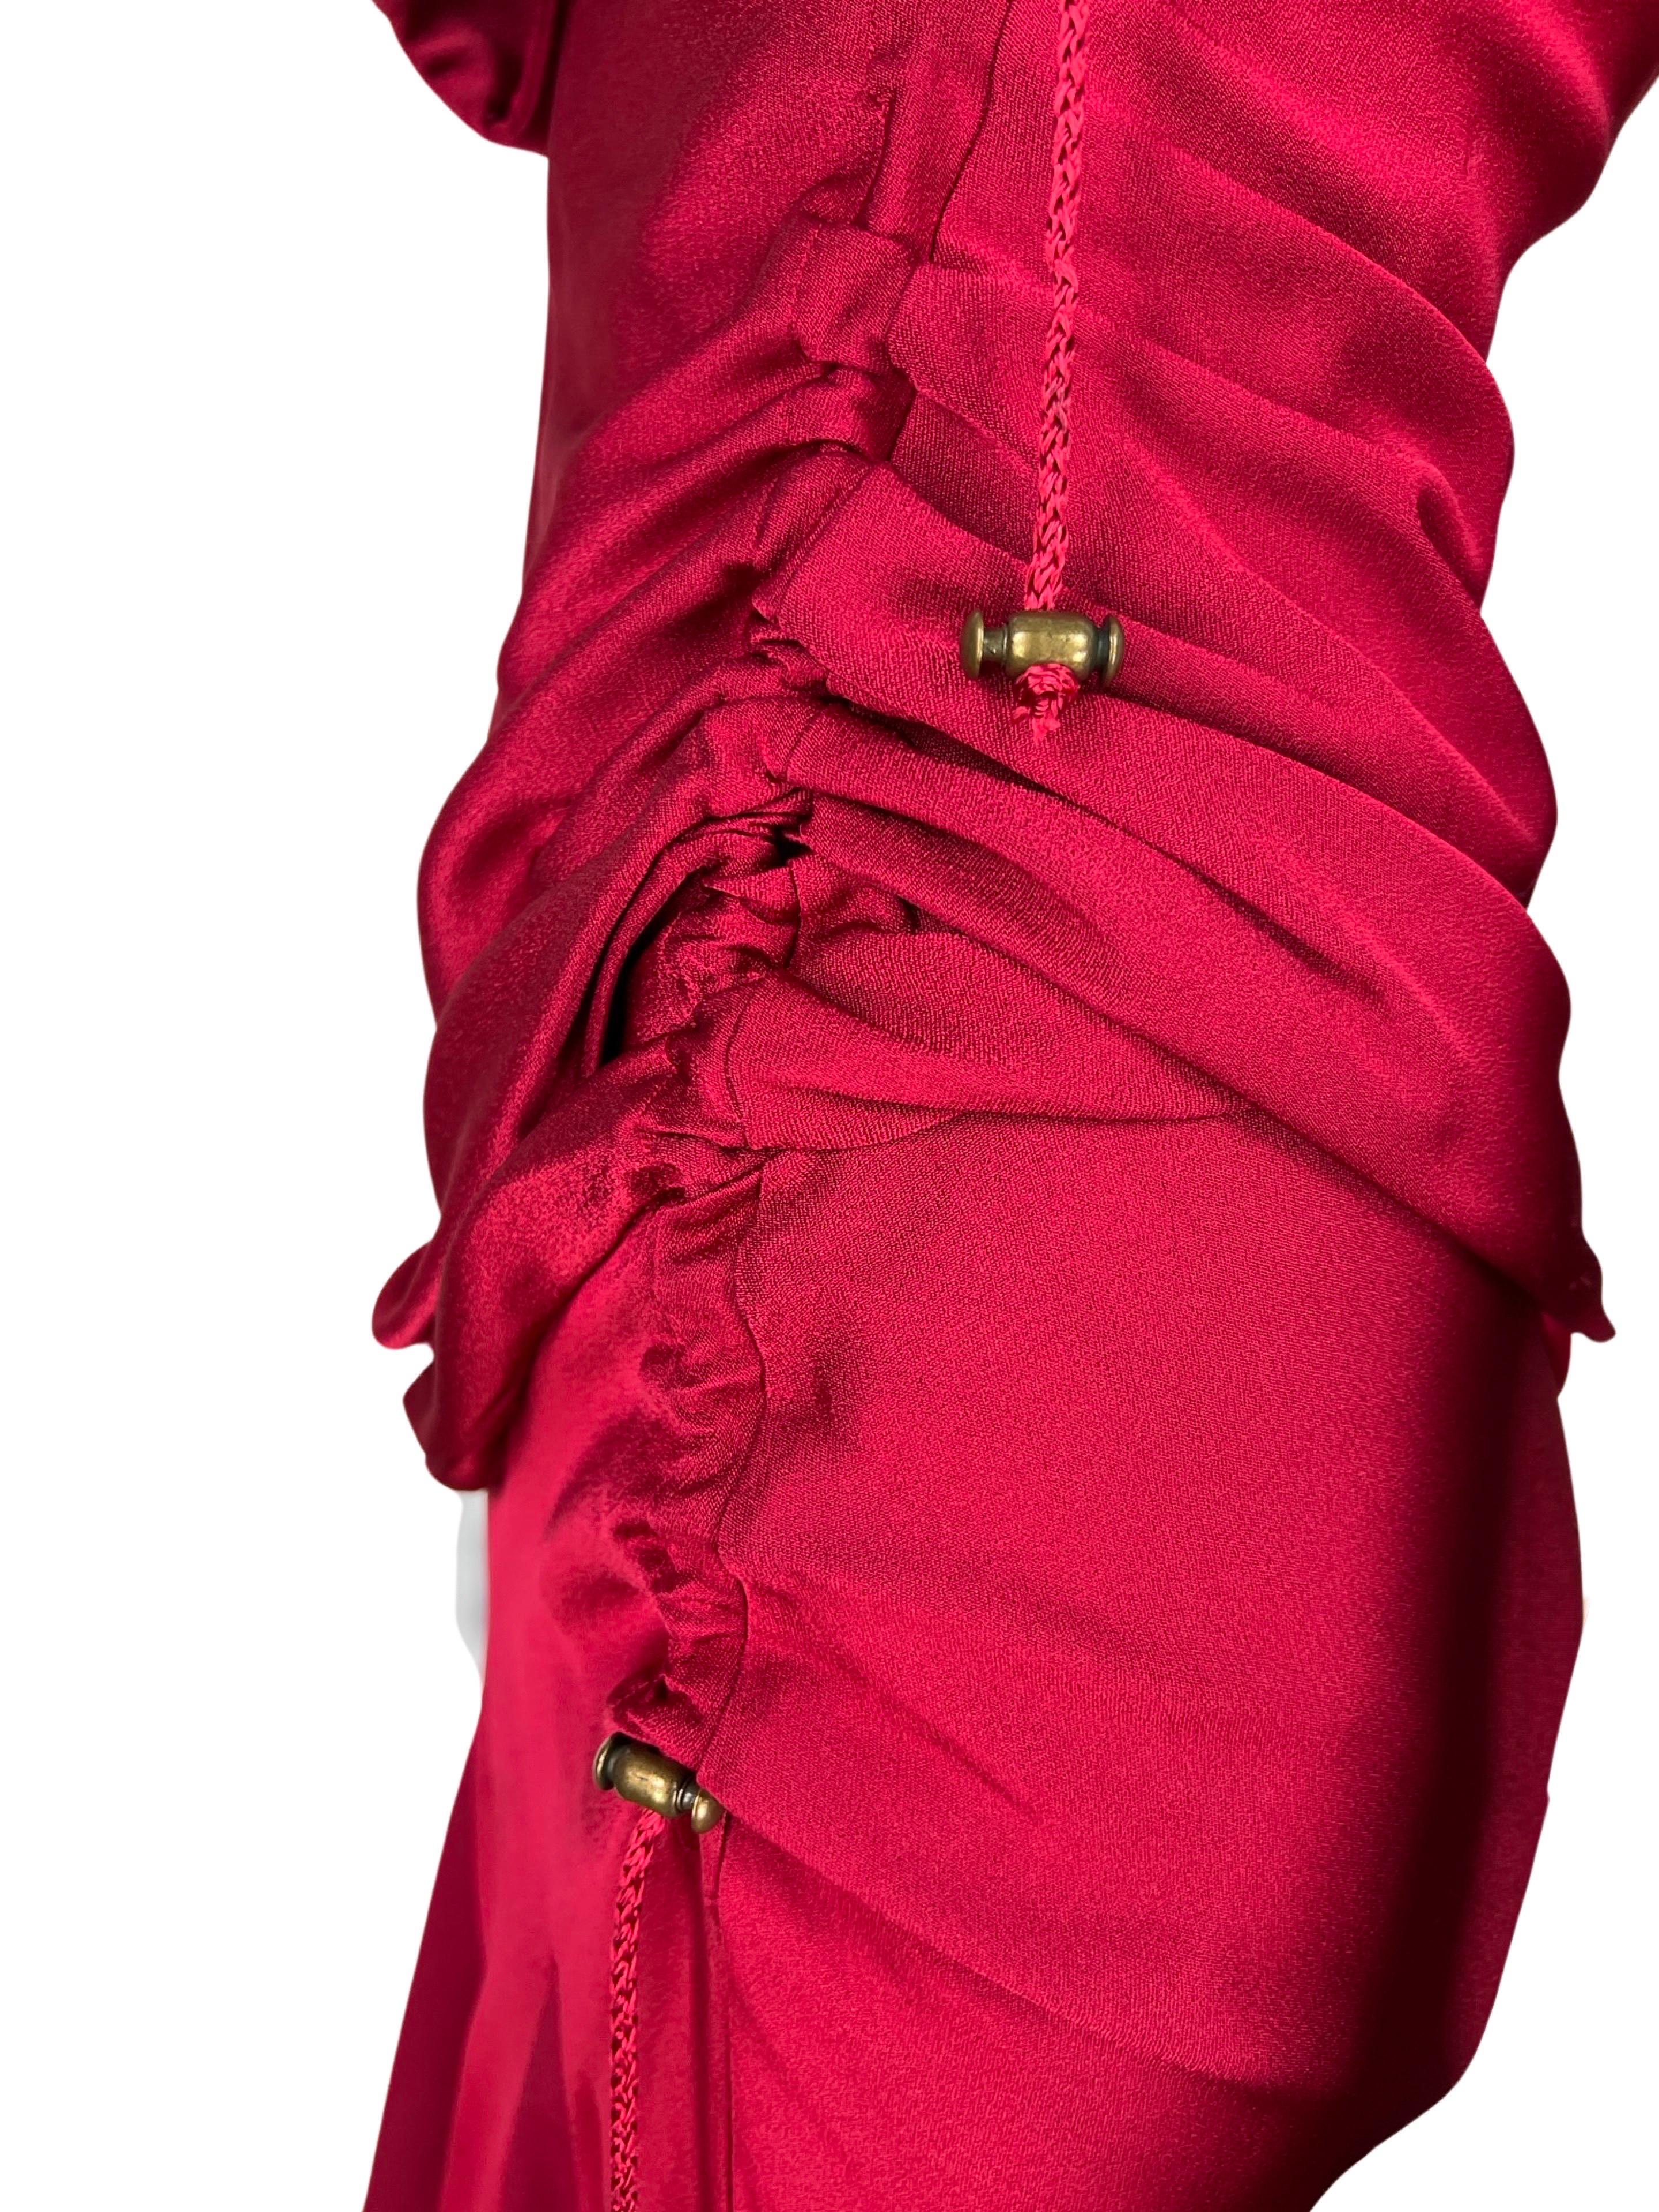 John Galliano Fall 2002 Red Draped Dress For Sale 7